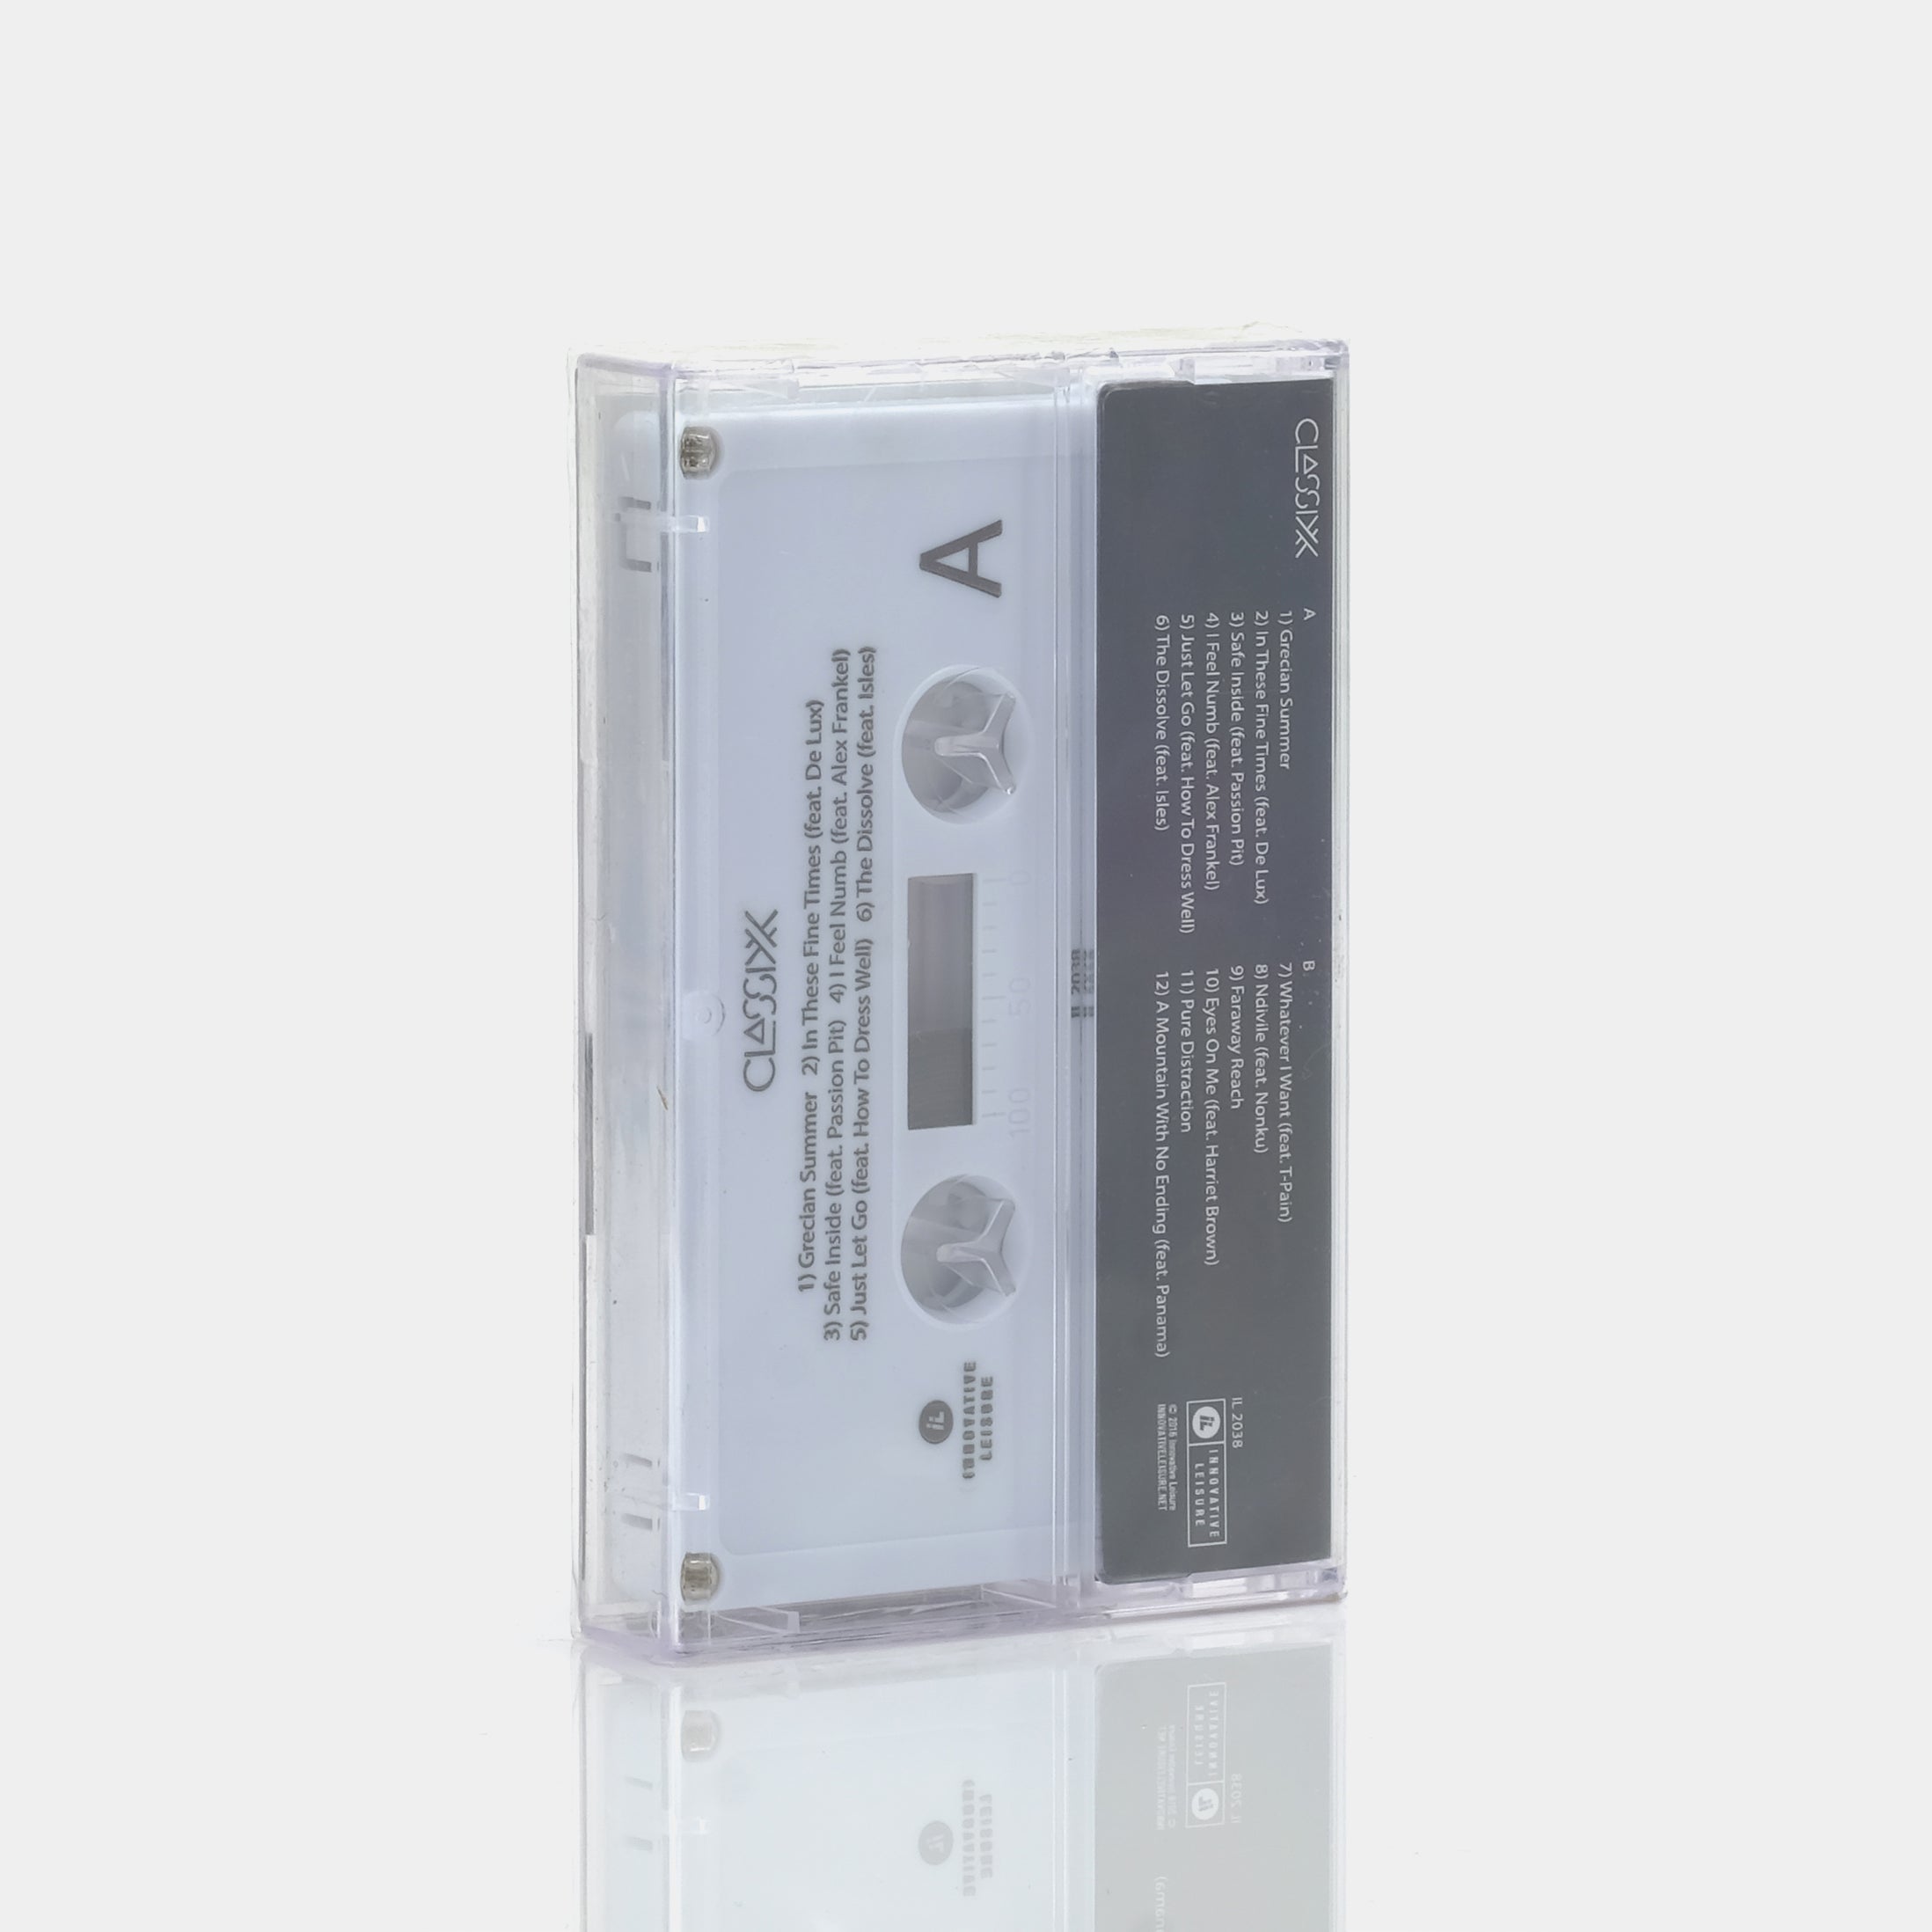 Classixx - Faraway Reach Cassette Tape